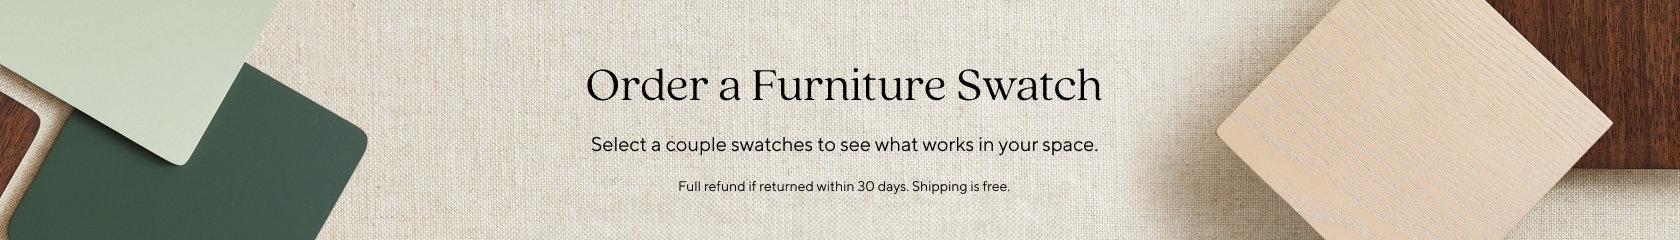 Order a Furniture Swatch